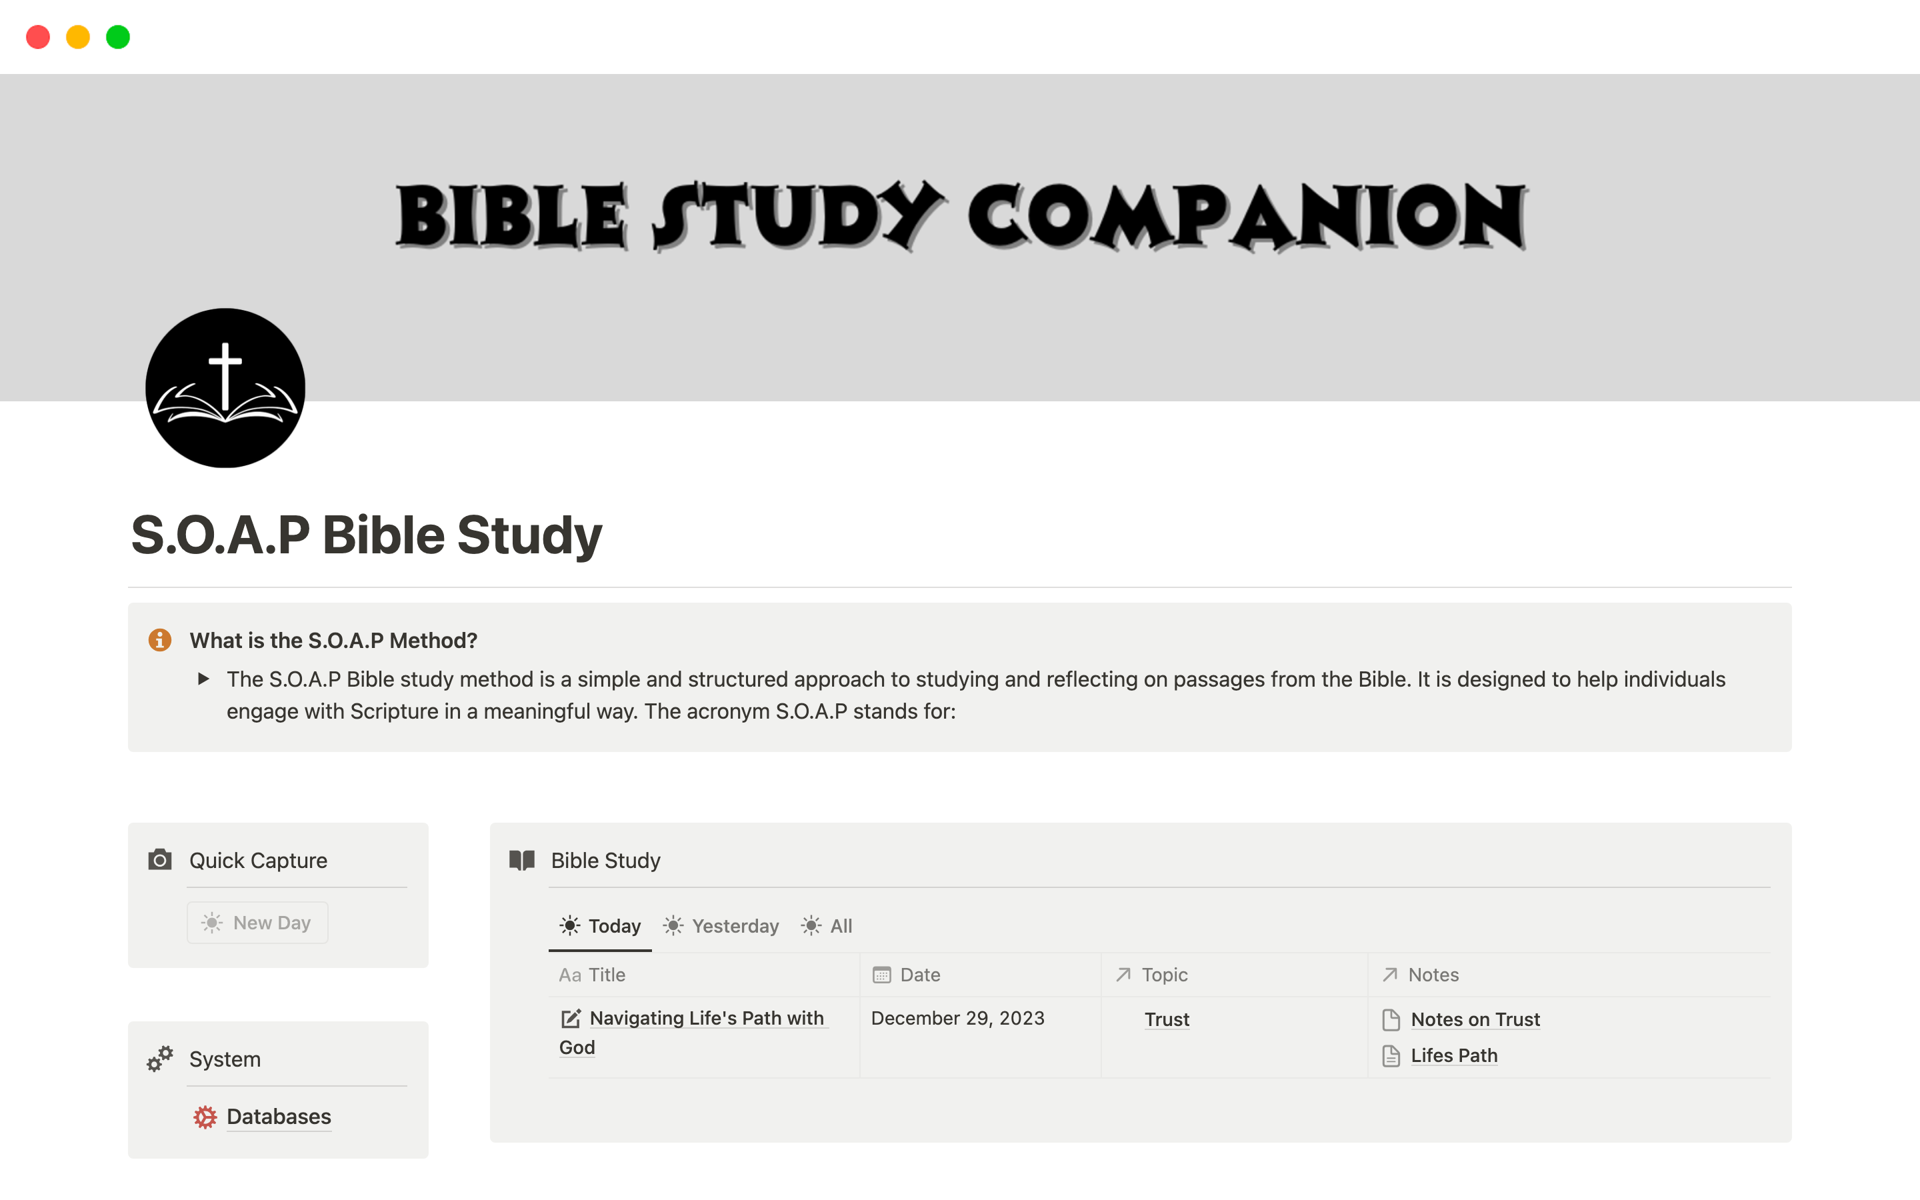 Aperçu du modèle de Bible Study Companion